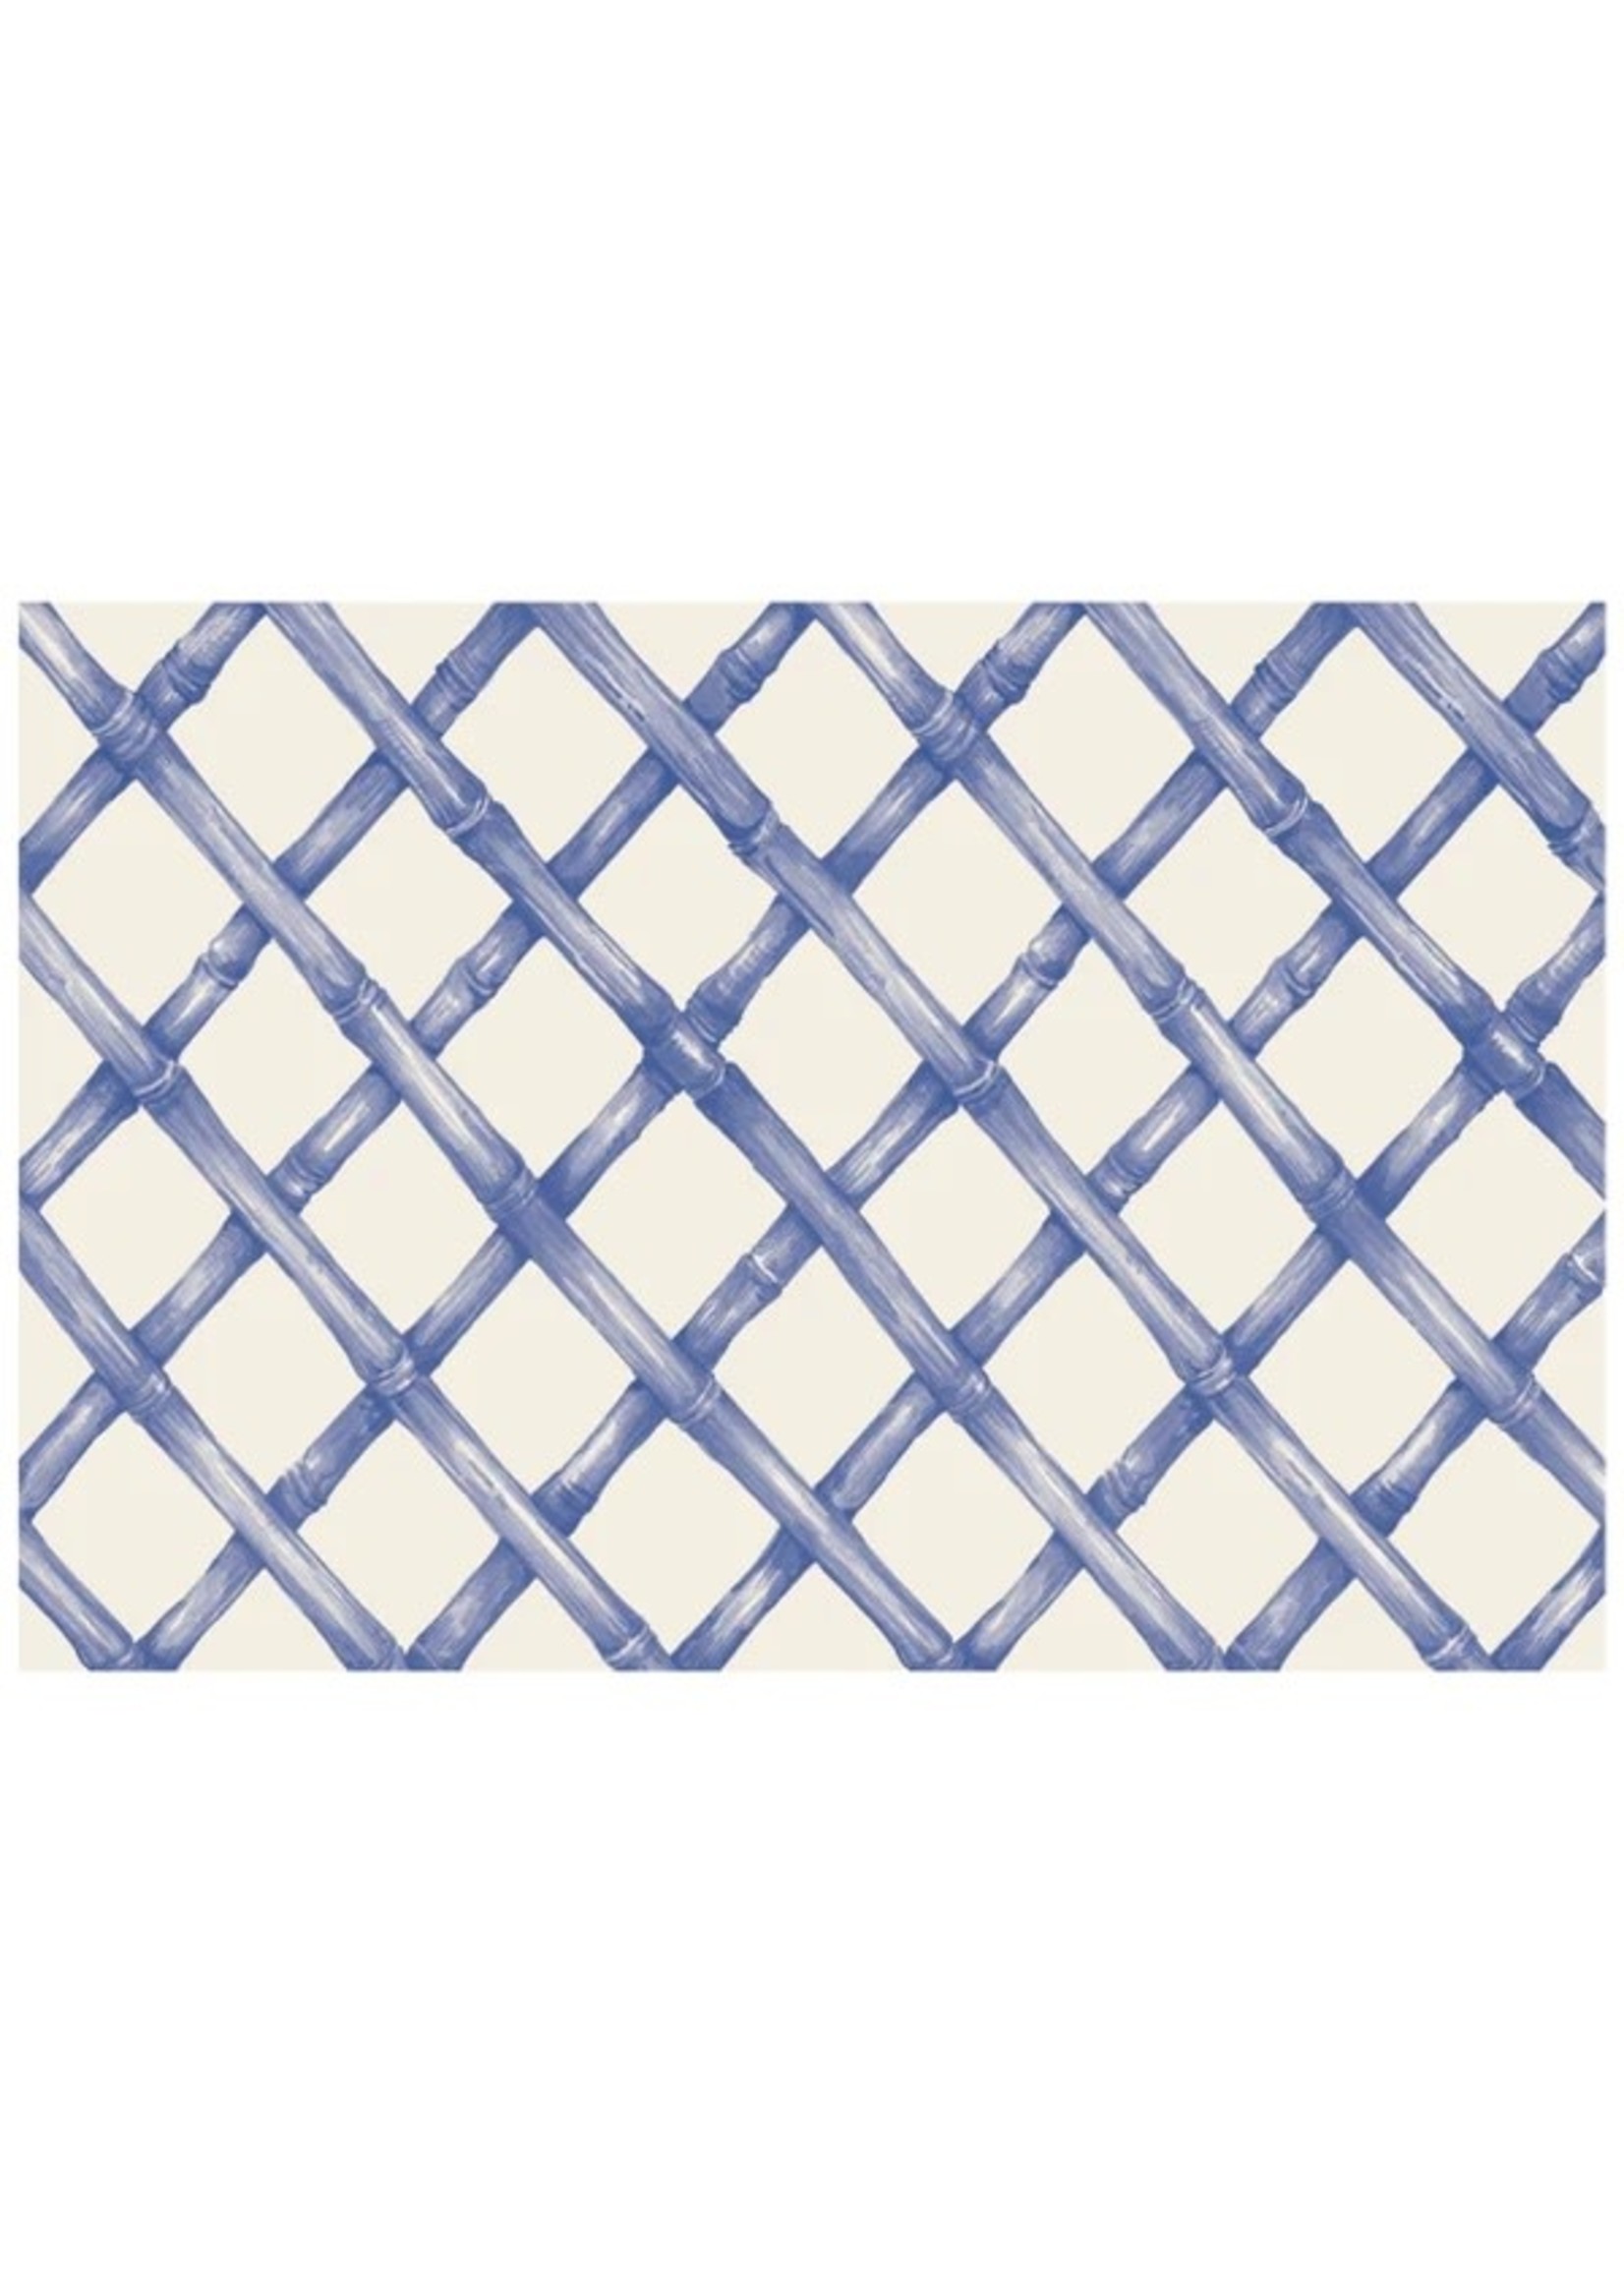 Hester & Cook Paper Placemats - Blue Lattice (24 sheets)